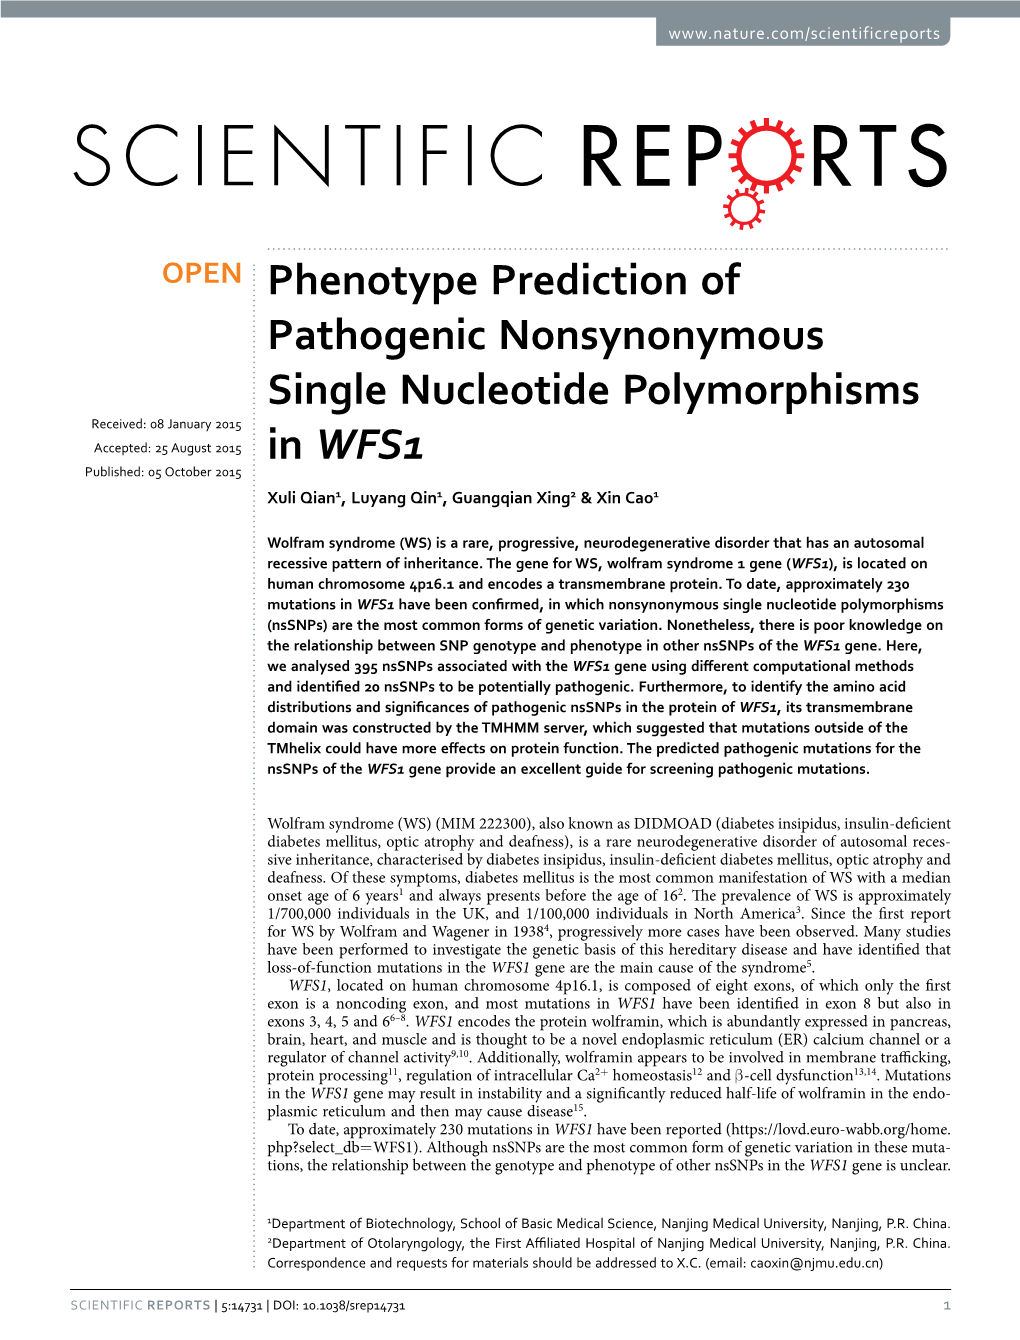 Phenotype Prediction of Pathogenic Nonsynonymous Single Nucleotide